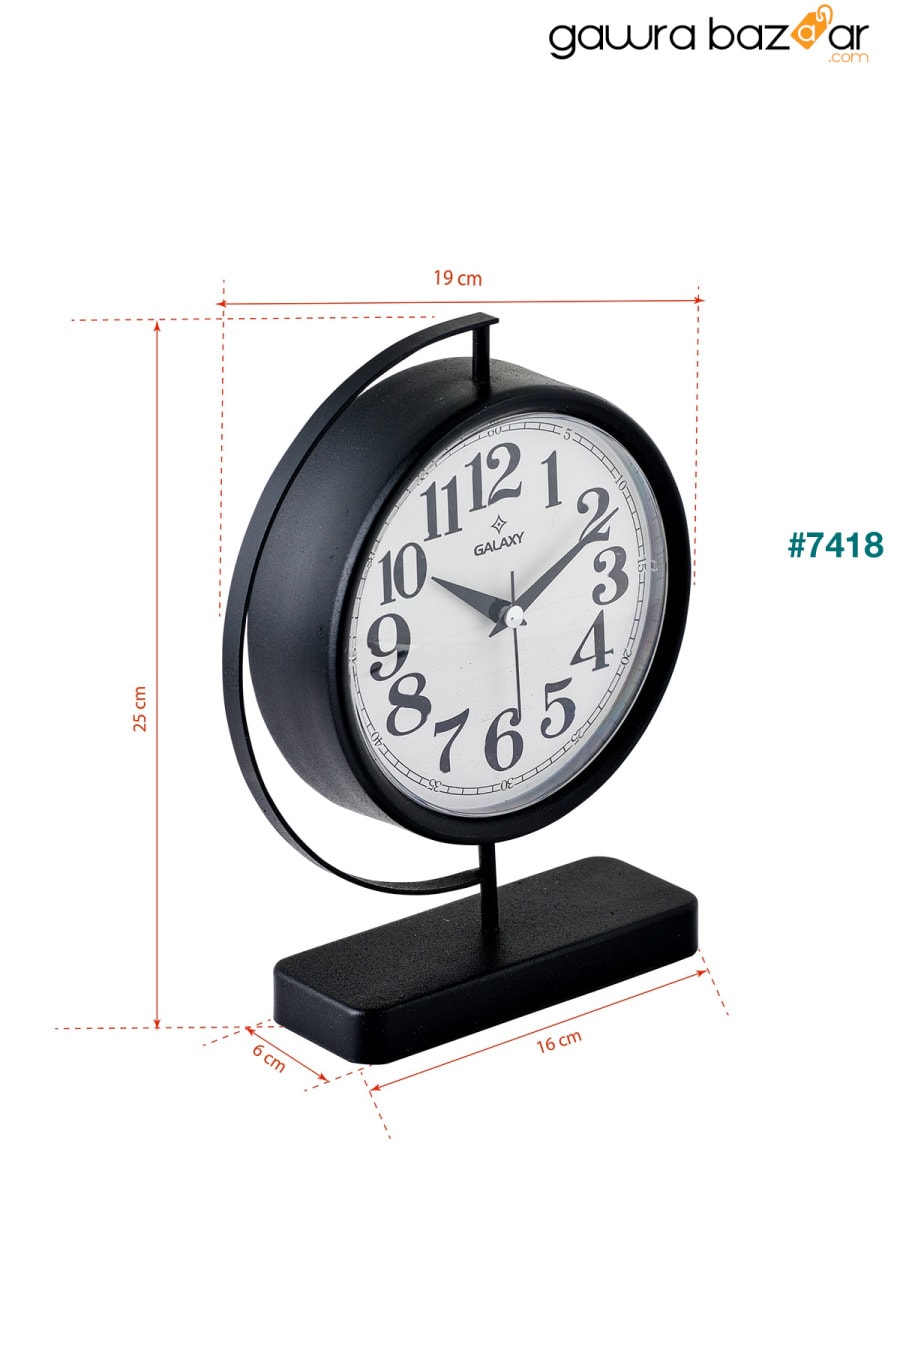 Muyika Maniera ساعة مكتب معدنية مزخرفة آلية صامتة أسود mms Muyika Design 4